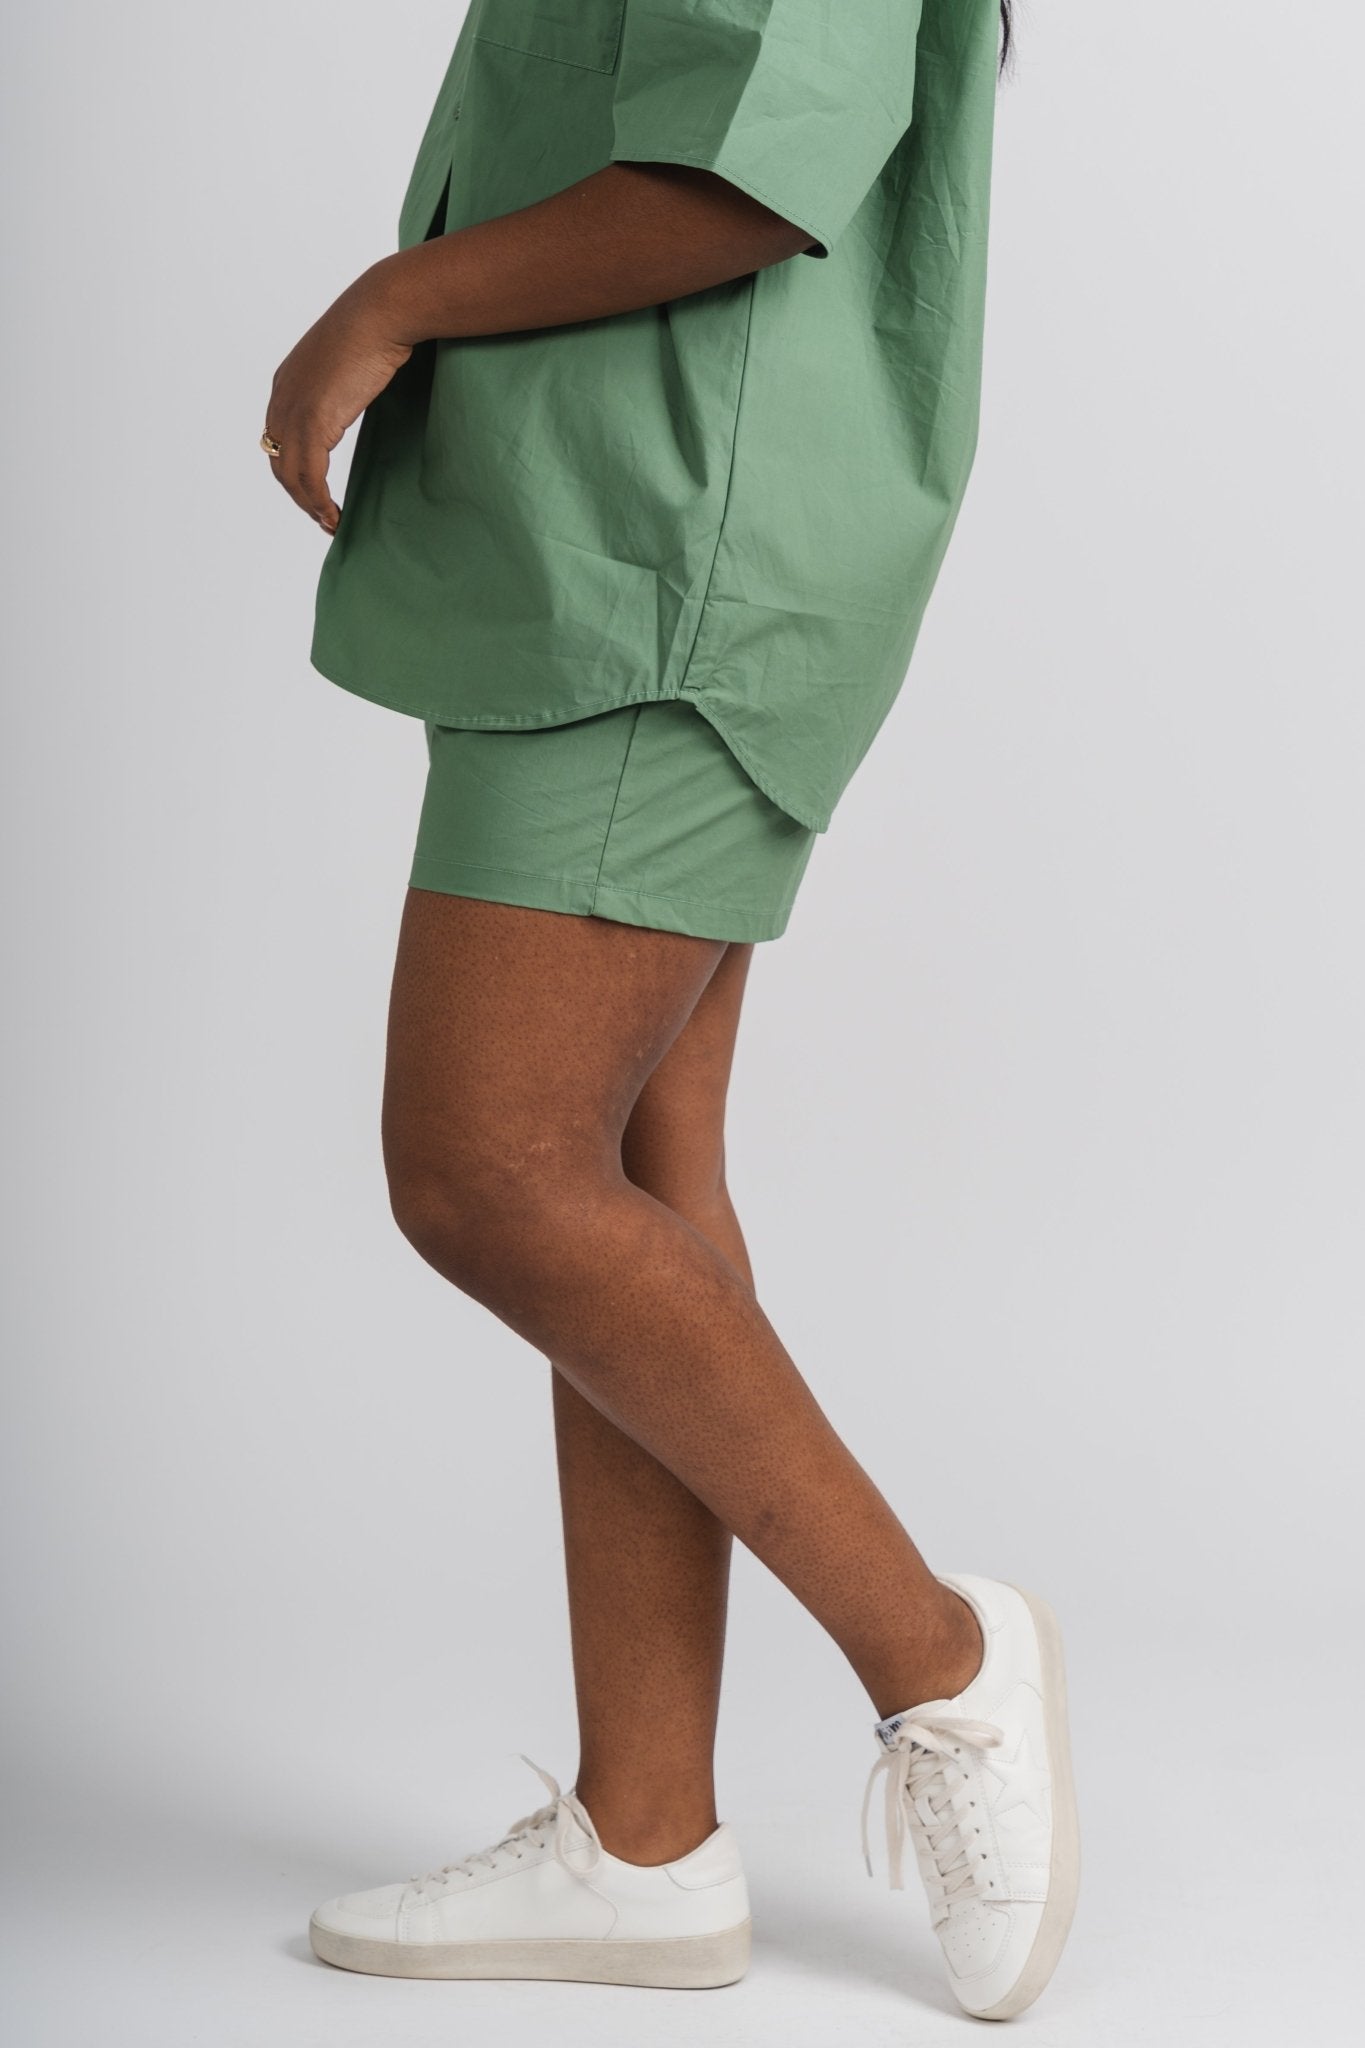 Elastic waist shorts green - Cute Shorts - Fun Cozy Basics at Lush Fashion Lounge Boutique in Oklahoma City